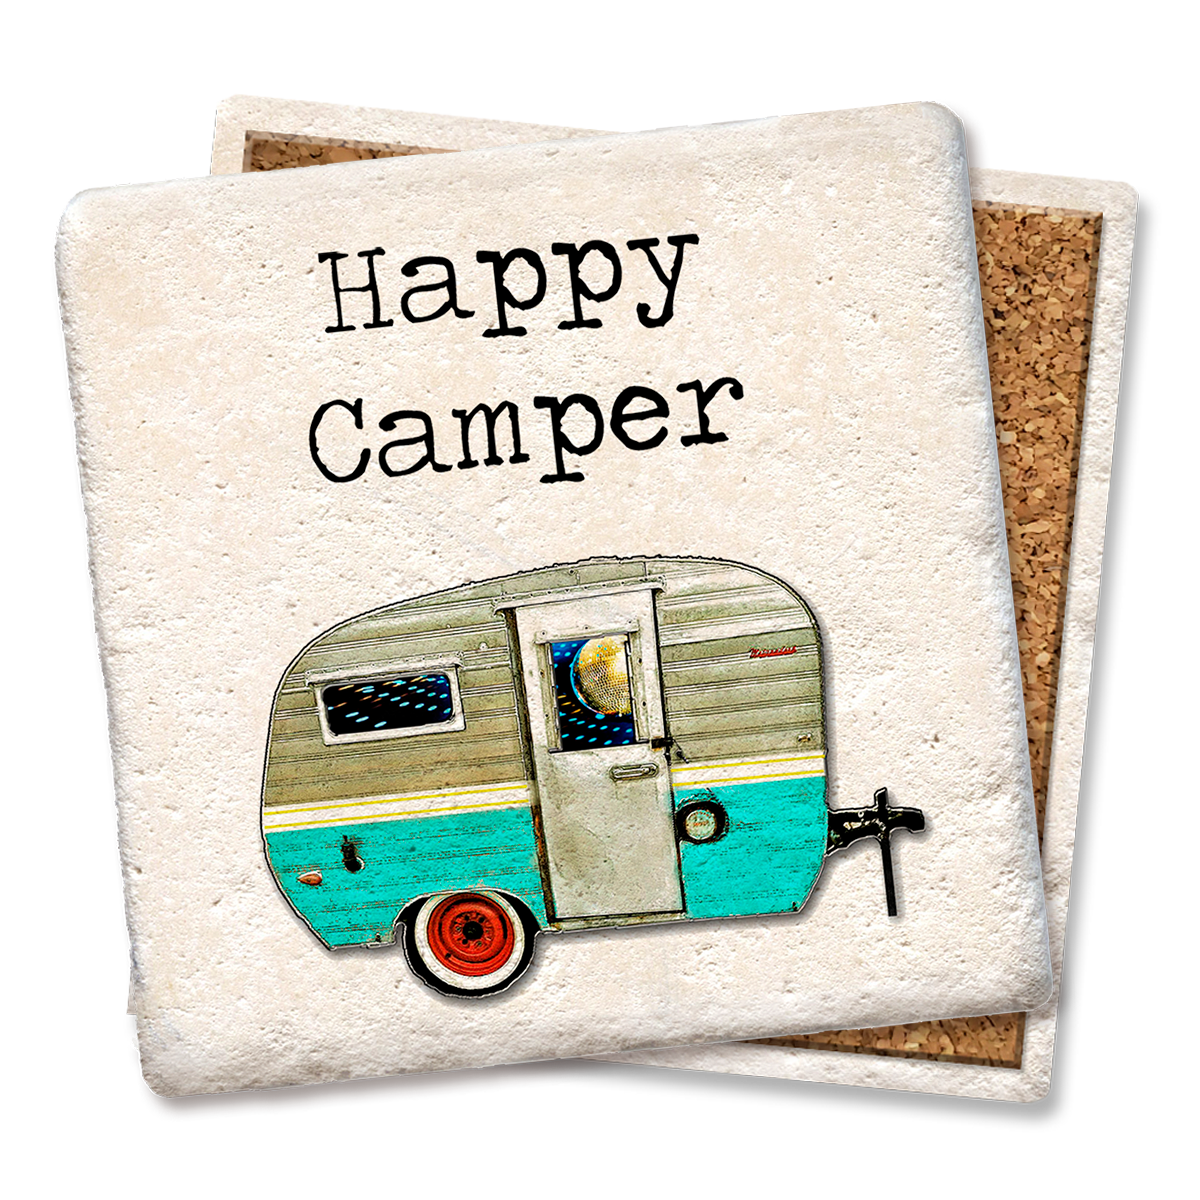 Happy Camper Coaster  Tipsy Coasters & Gifts   